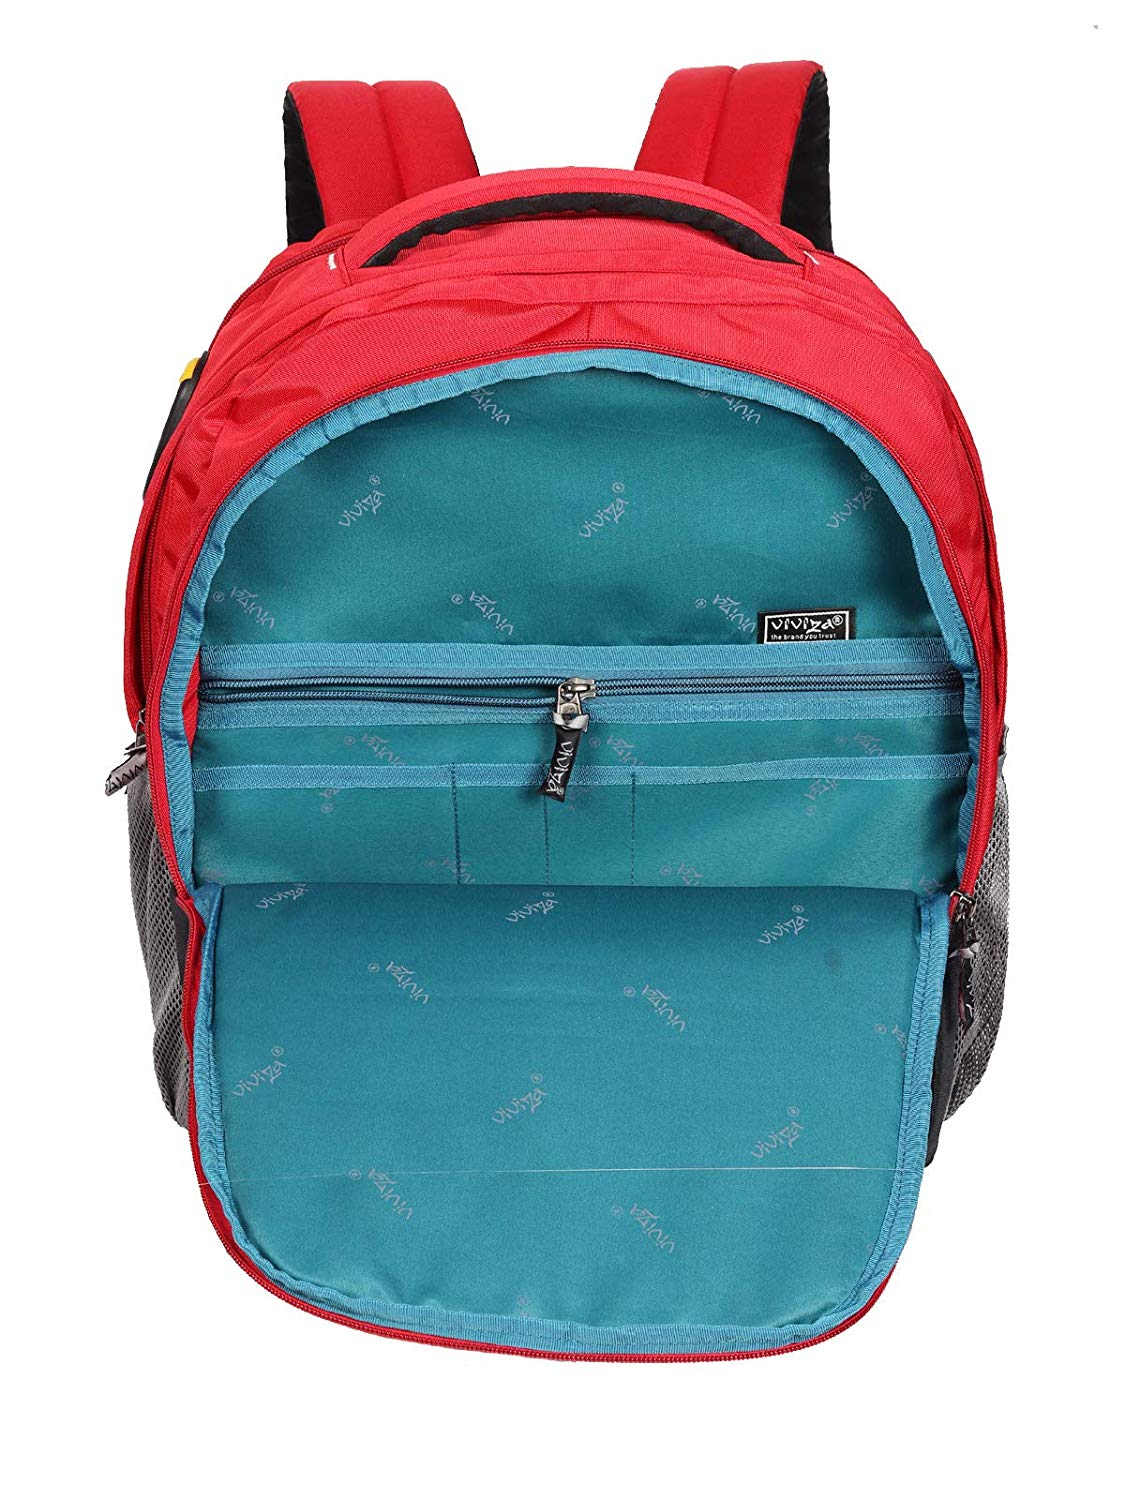 Viviza 3 Compartment Large Laptop Bag (Red) – Viviza Bags